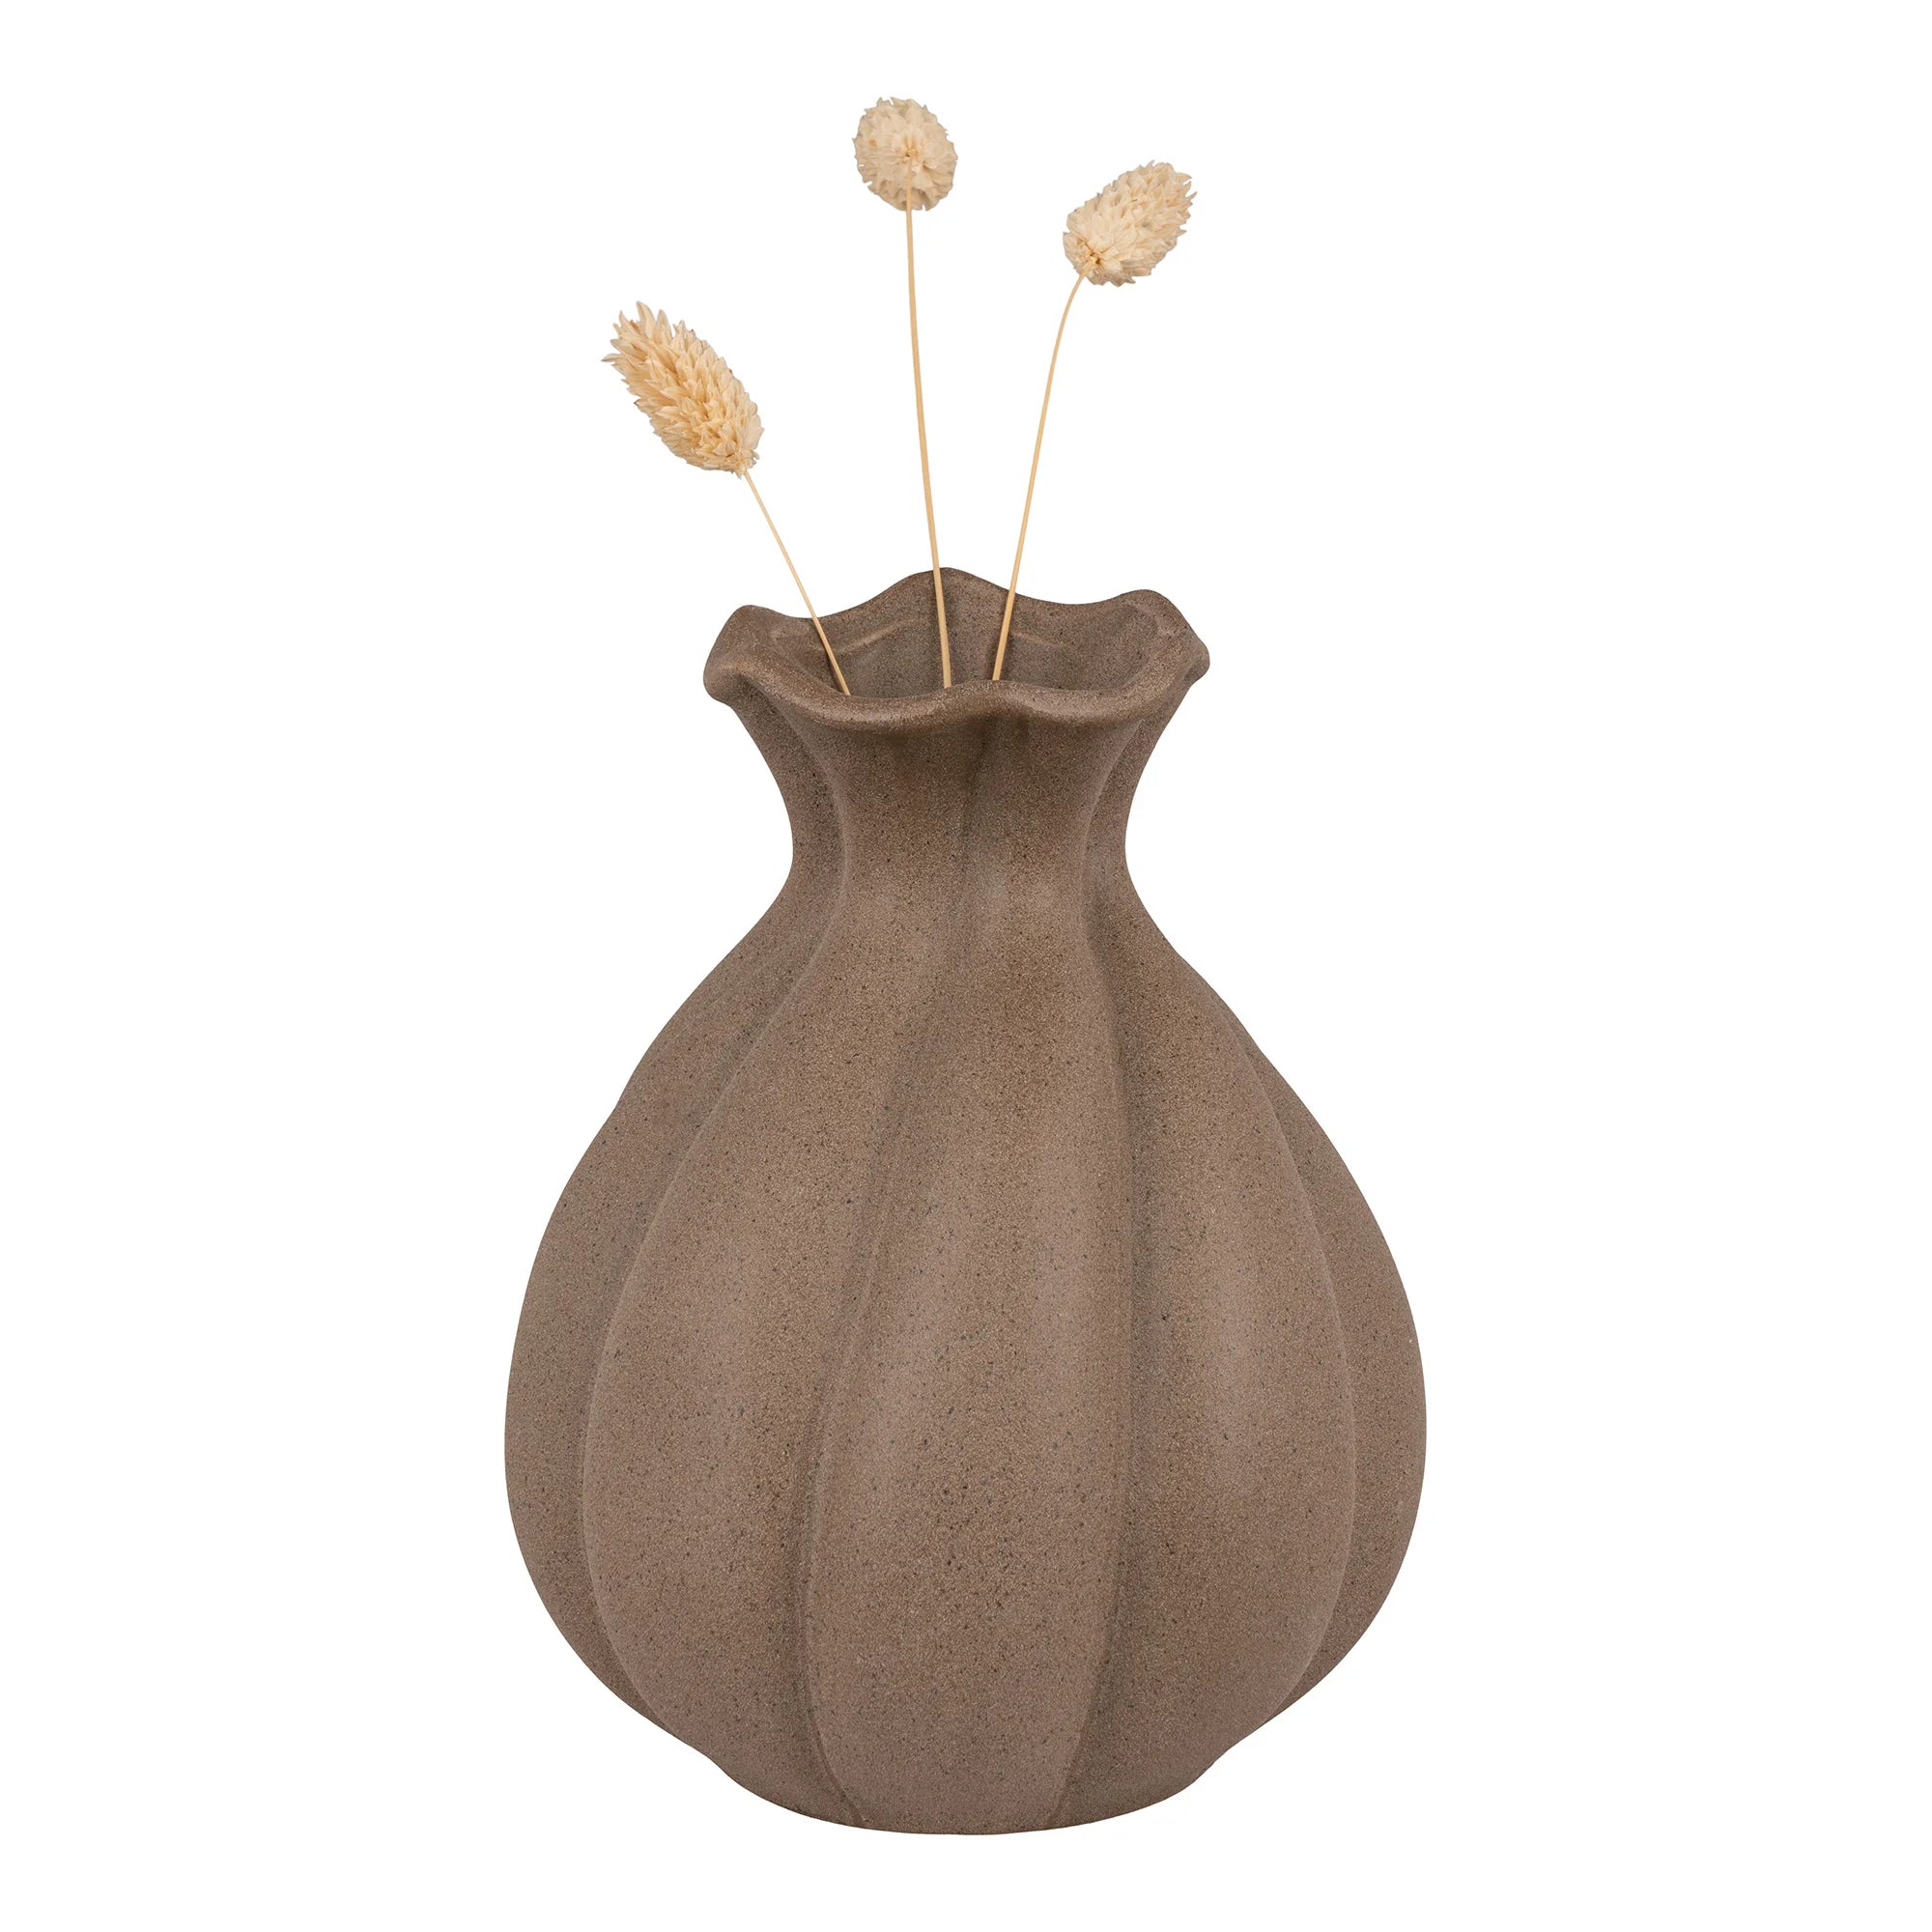 Vas i brun keramik